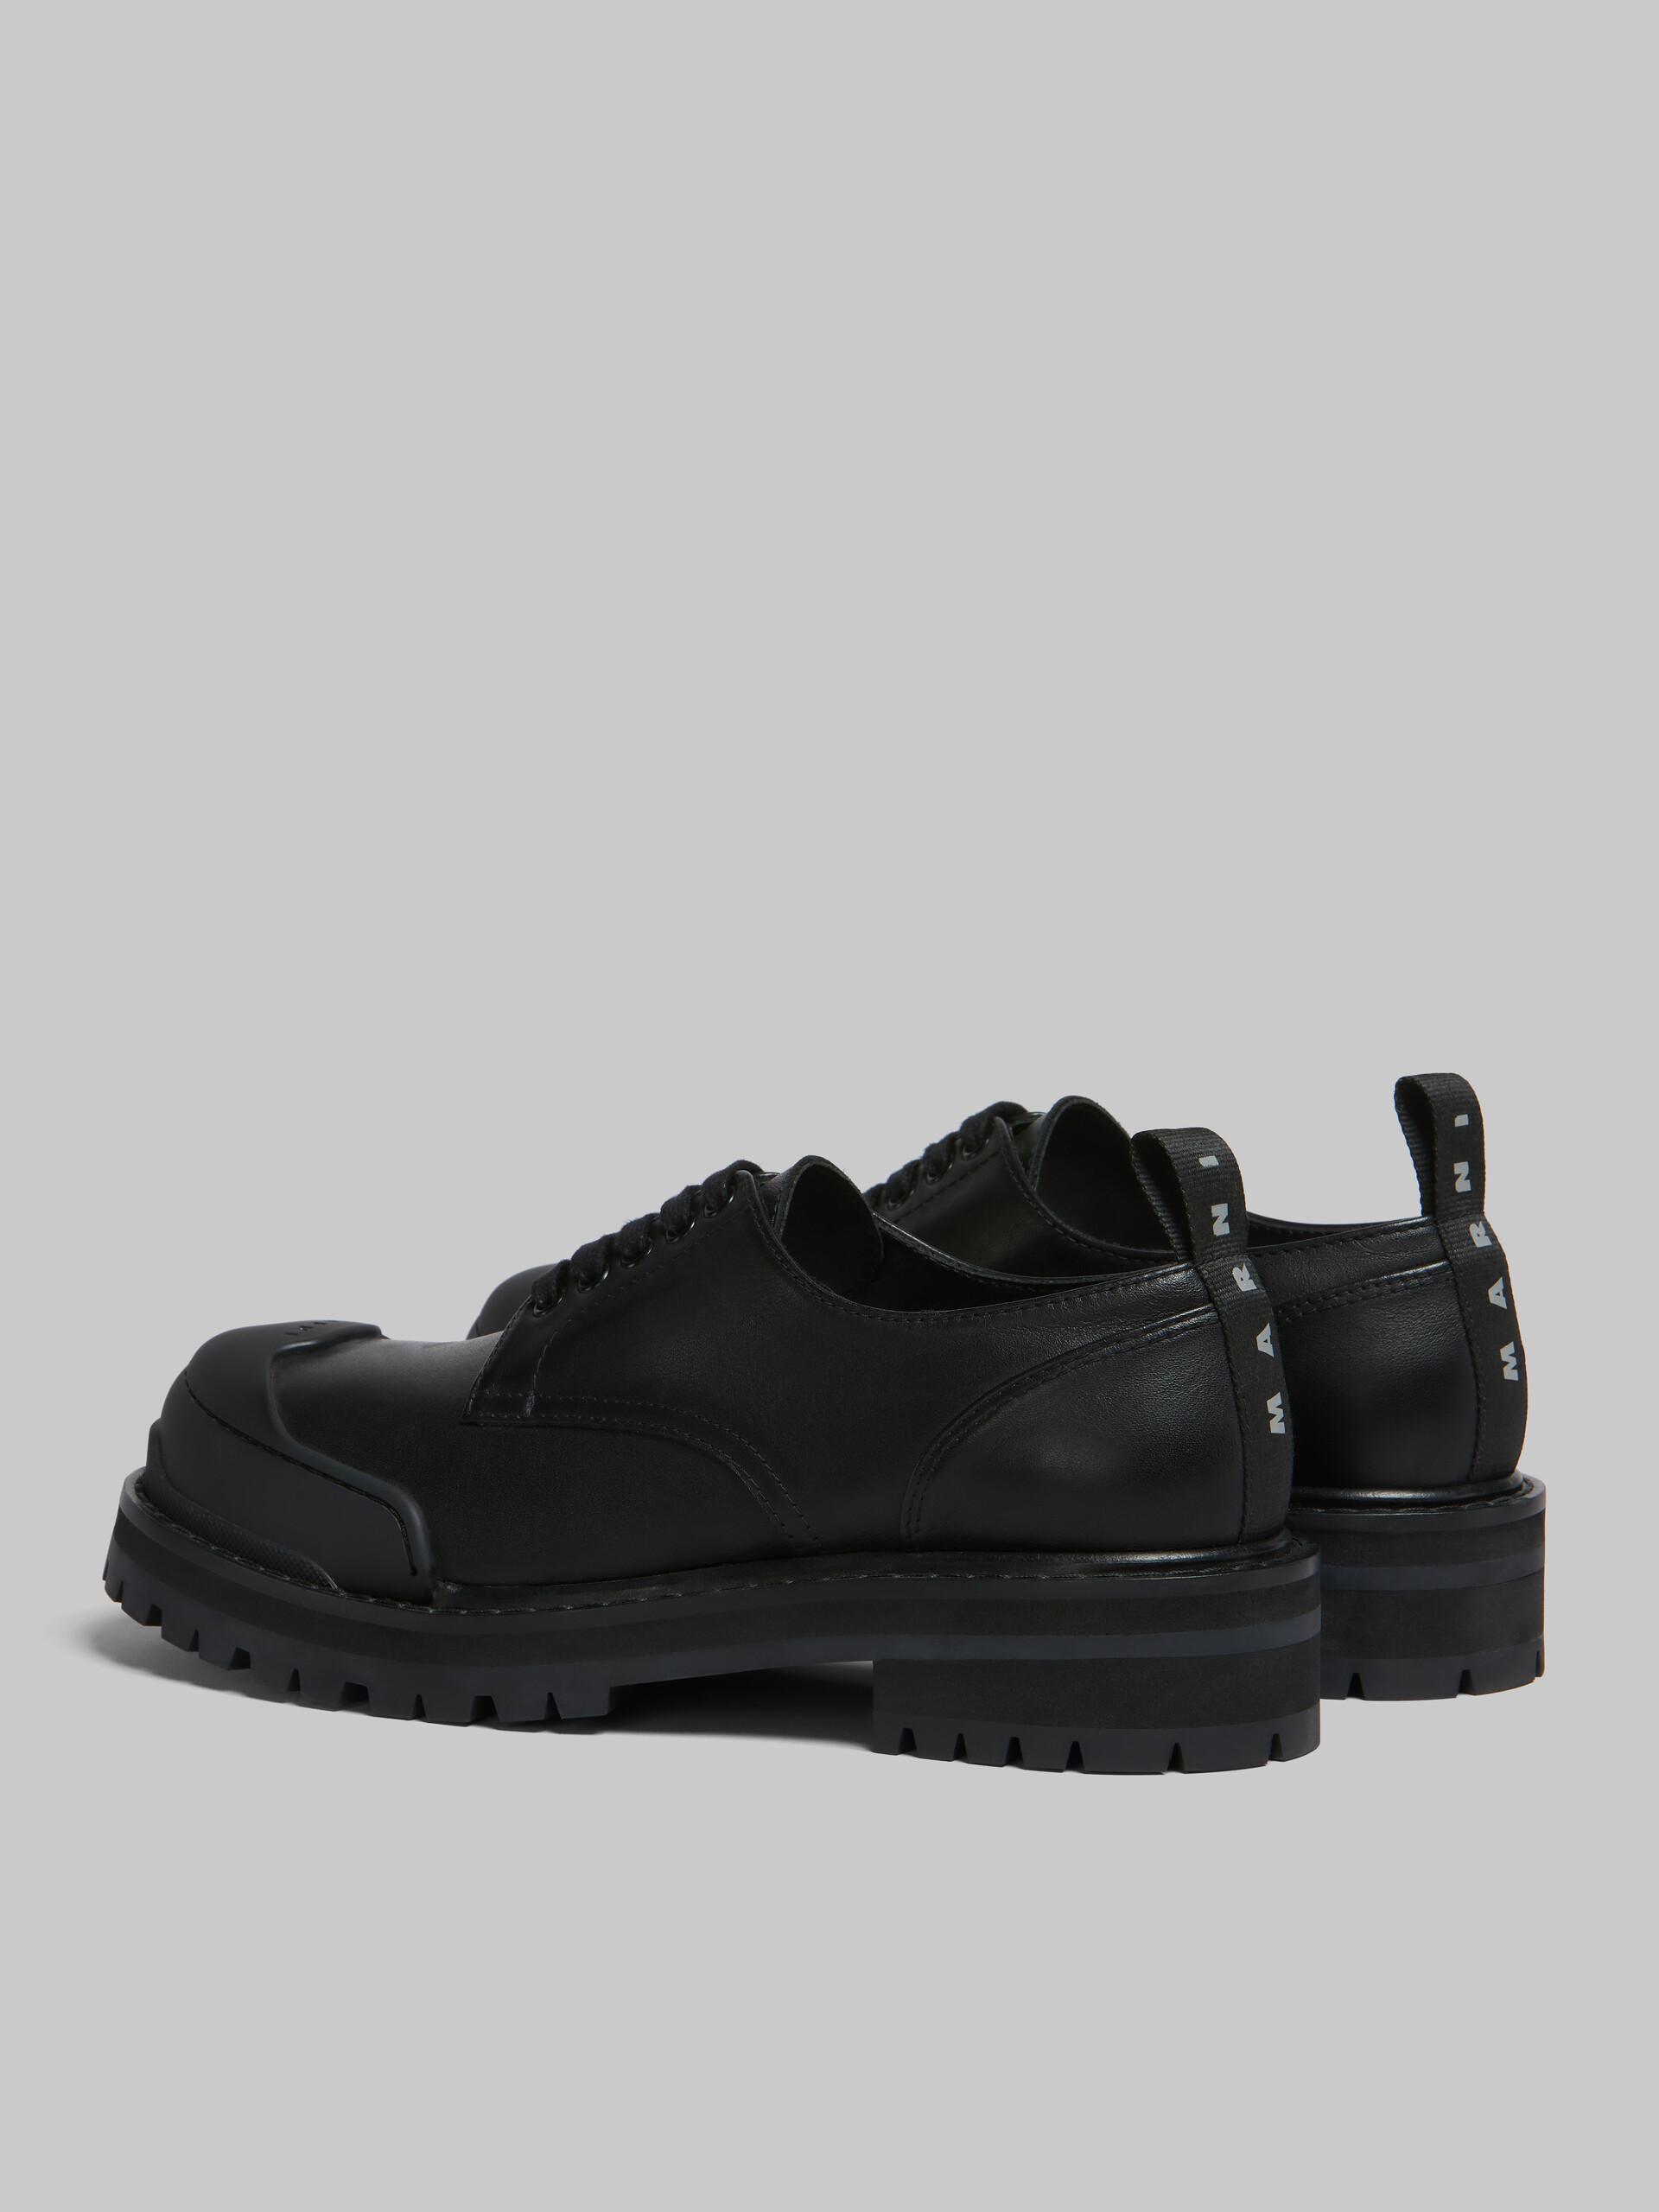 Chaussures derby Dada Army en cuir noir - Chaussures à Lacets - Image 3